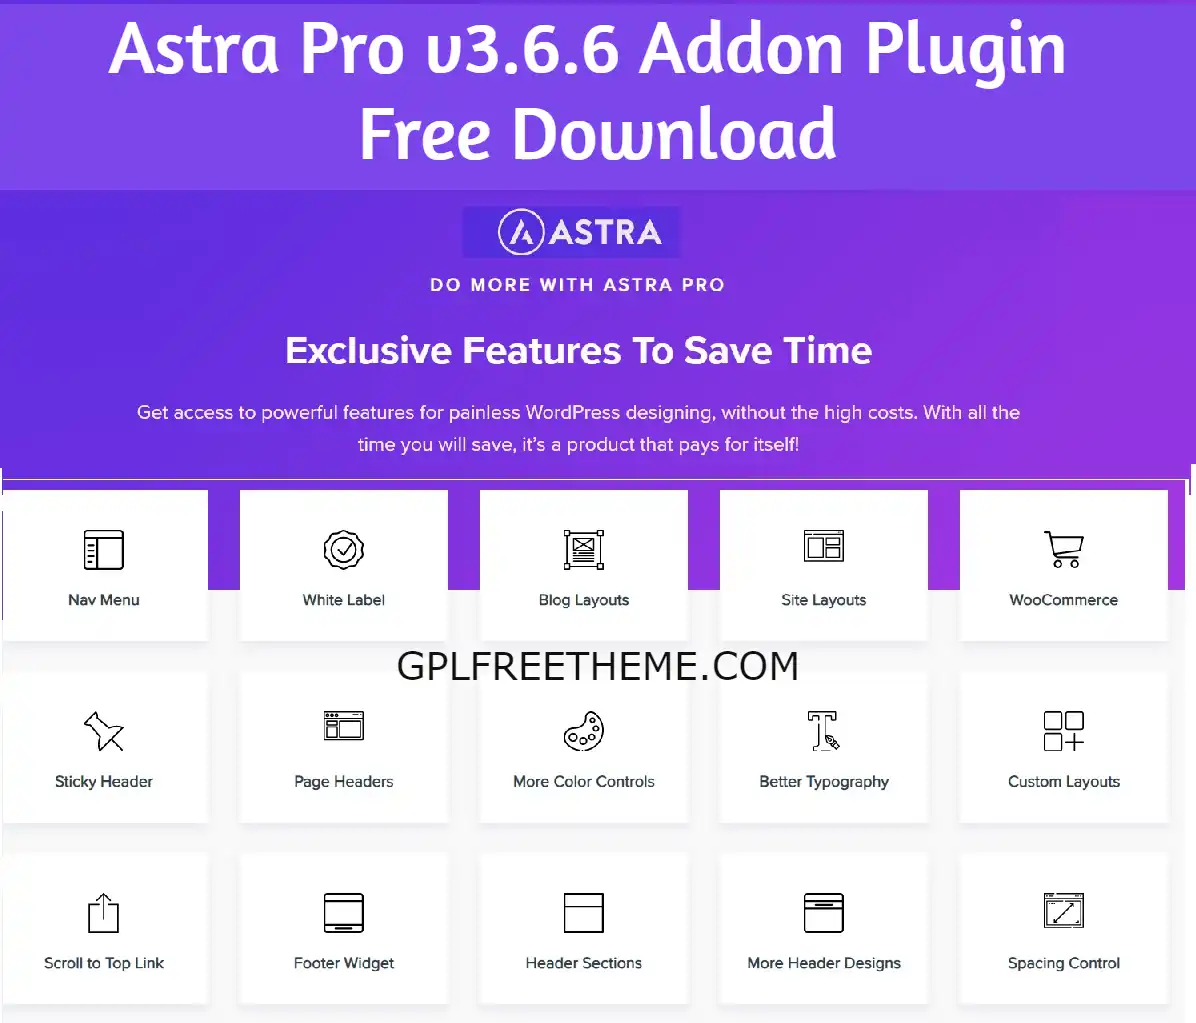 Astra Pro v3.6.6 Addon Plugin Free Download